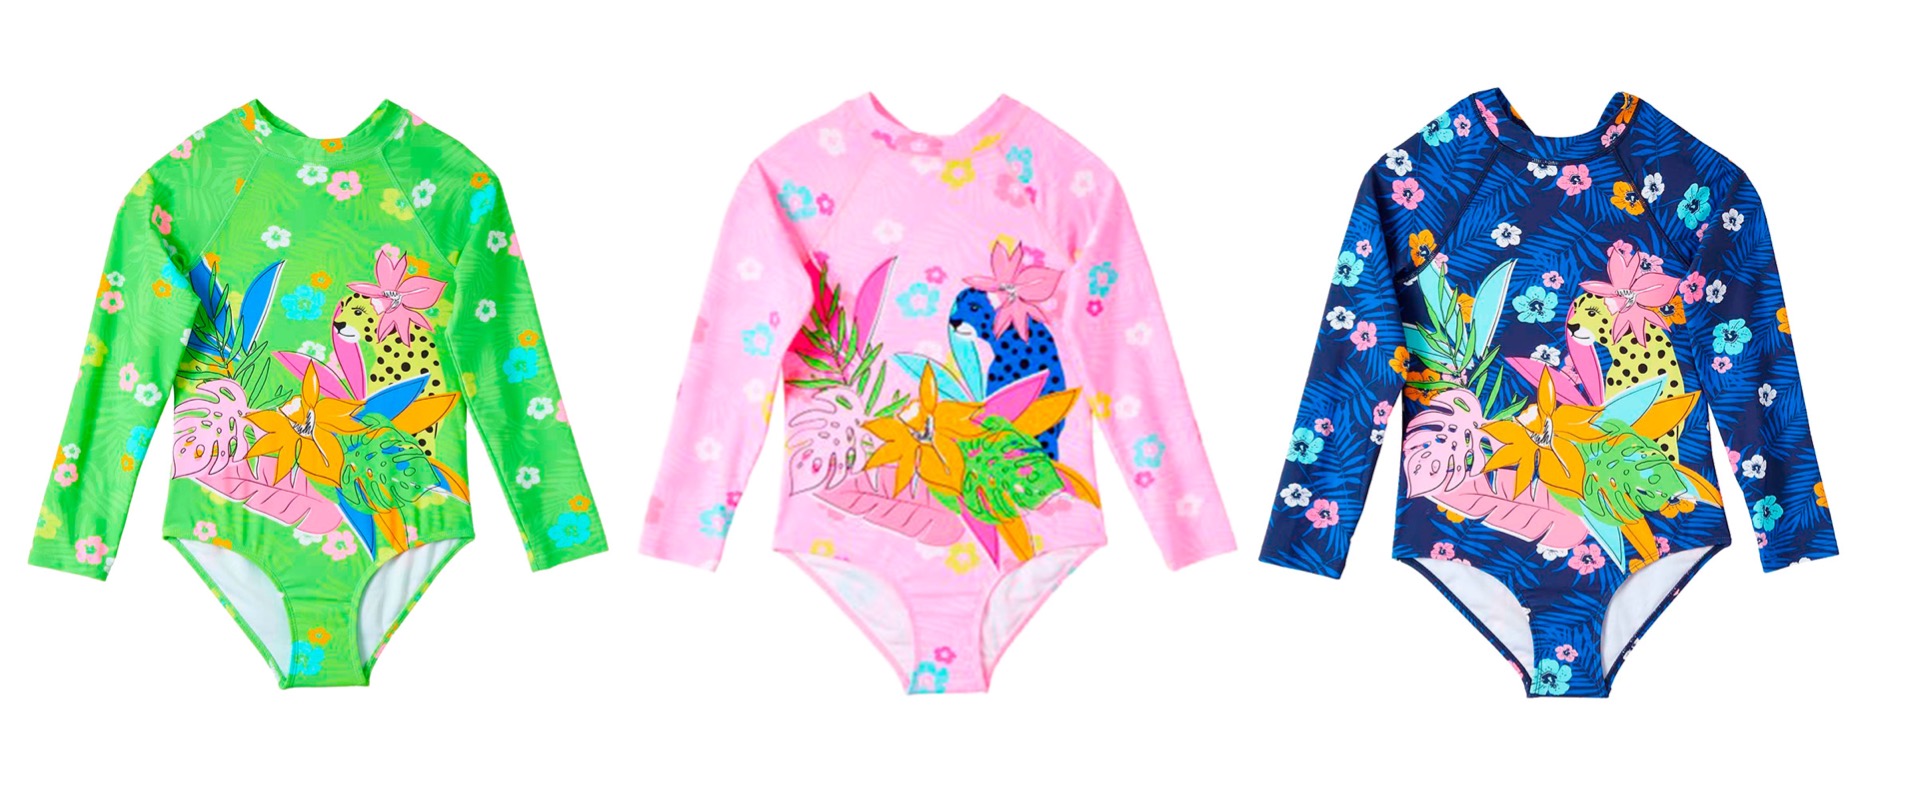 Little Girl's Fashion Rash Guard Swimwear - Two Tone Floral & Cheetah Print - Sizes 4-6X